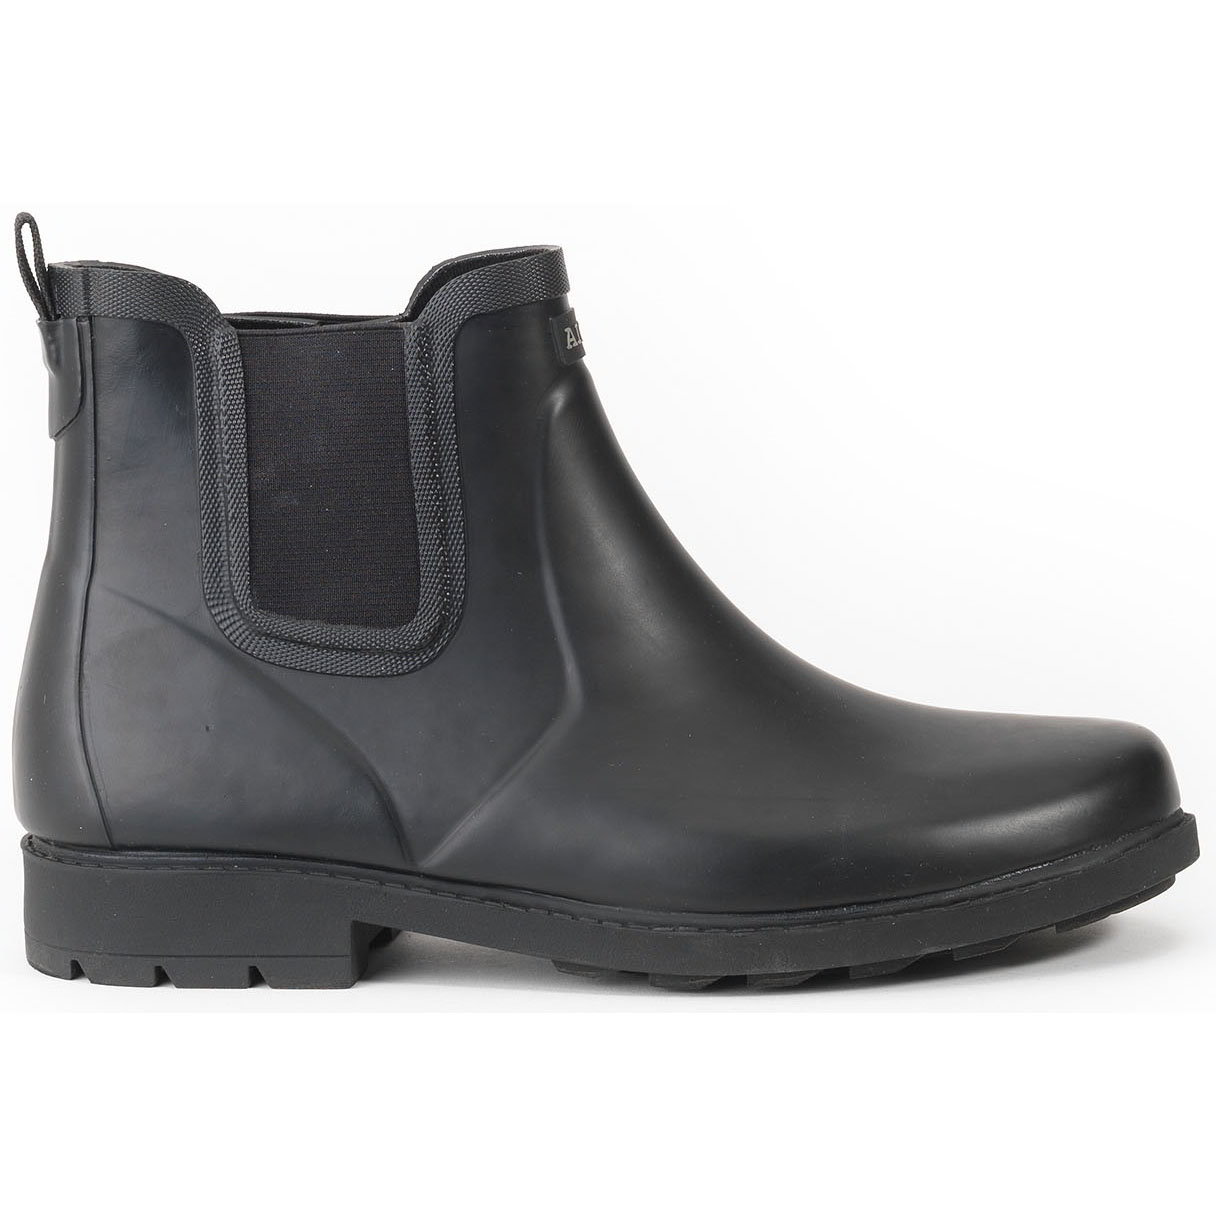 Aigle Mens Carville Wellies Ankle Rain Boots - UK 10.5 Black 2951